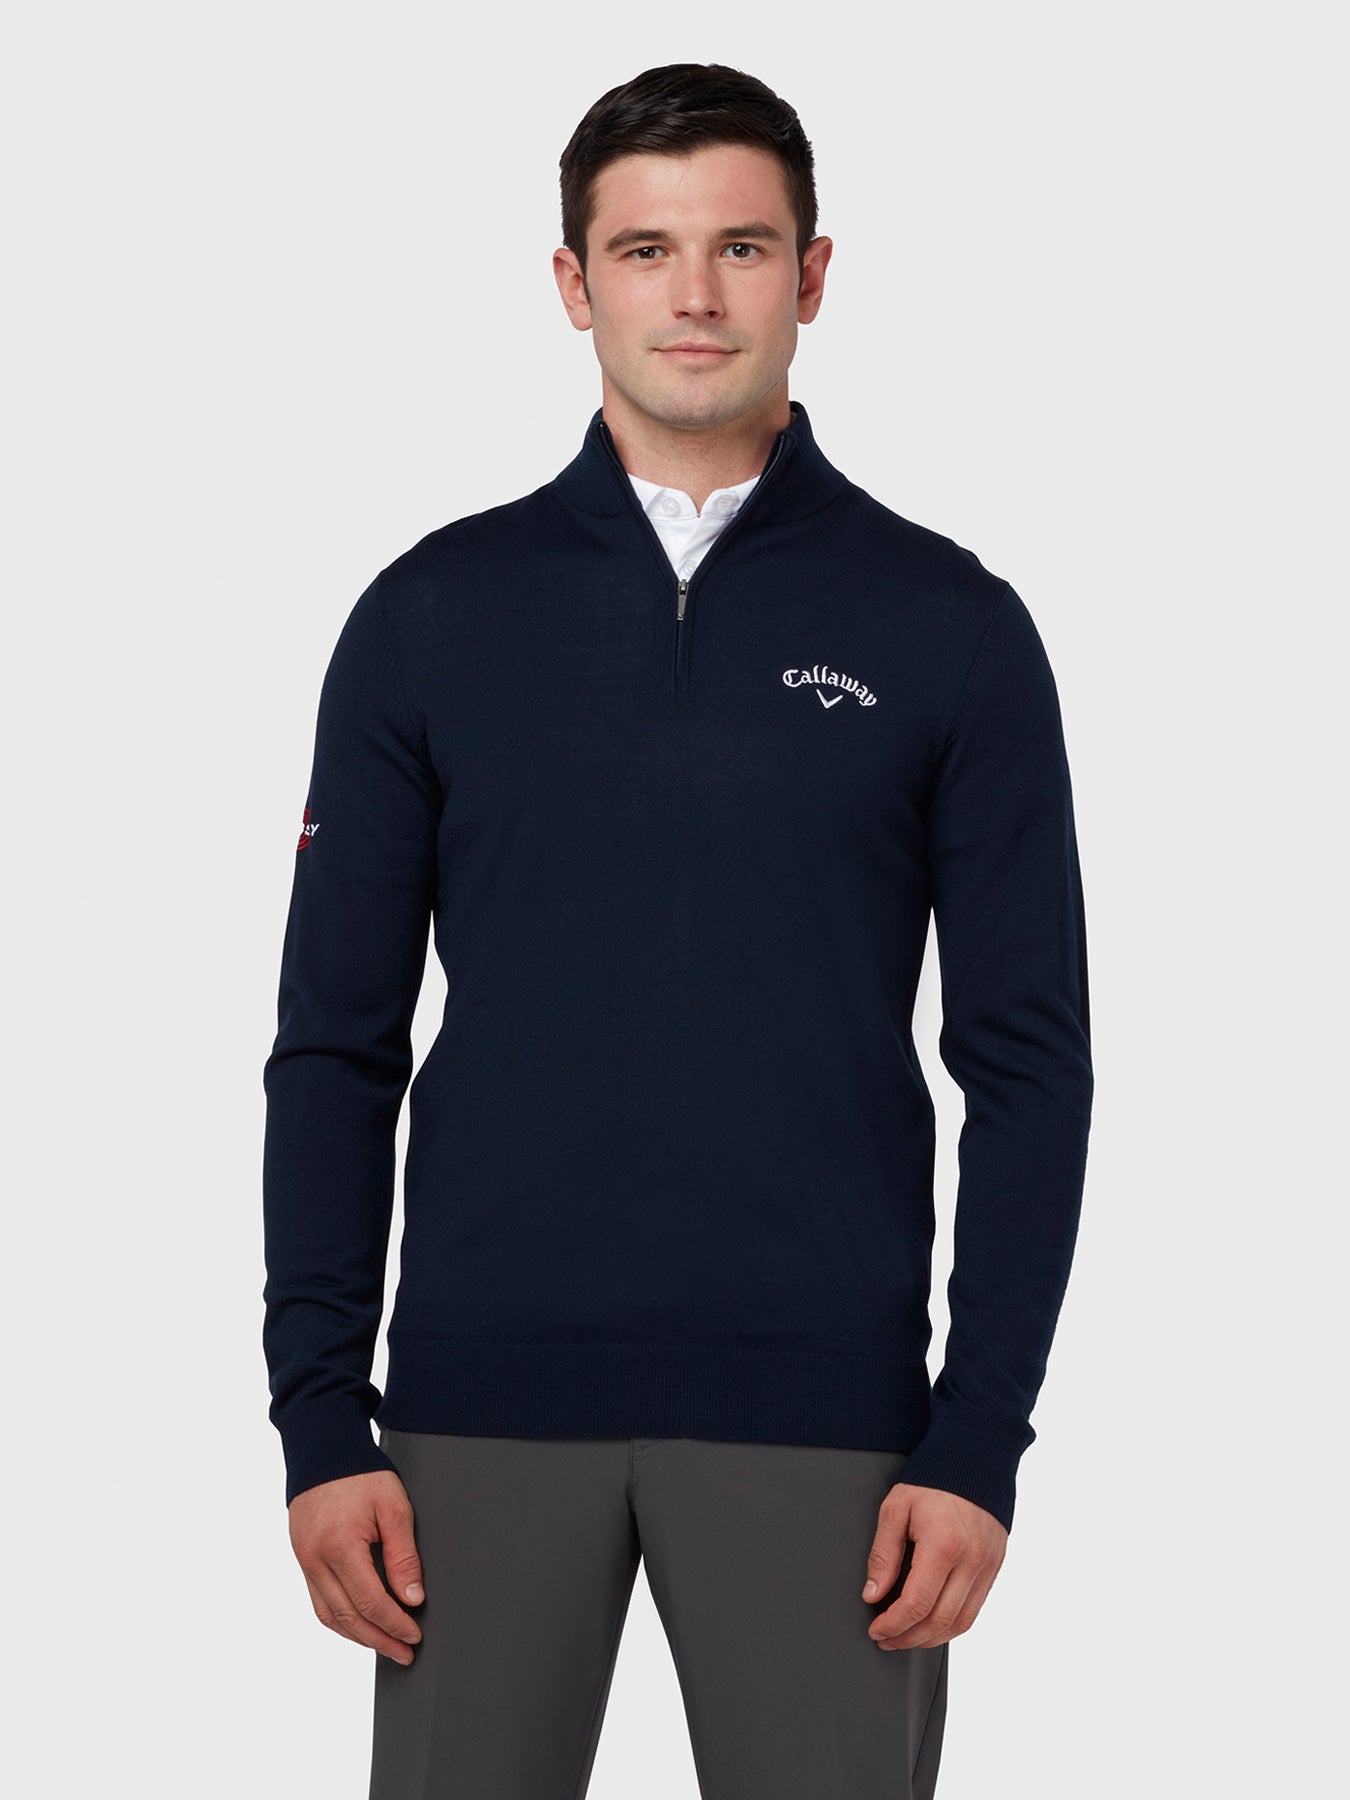 View Quarter Zip Blended Merino Sweater In Navy Blue information